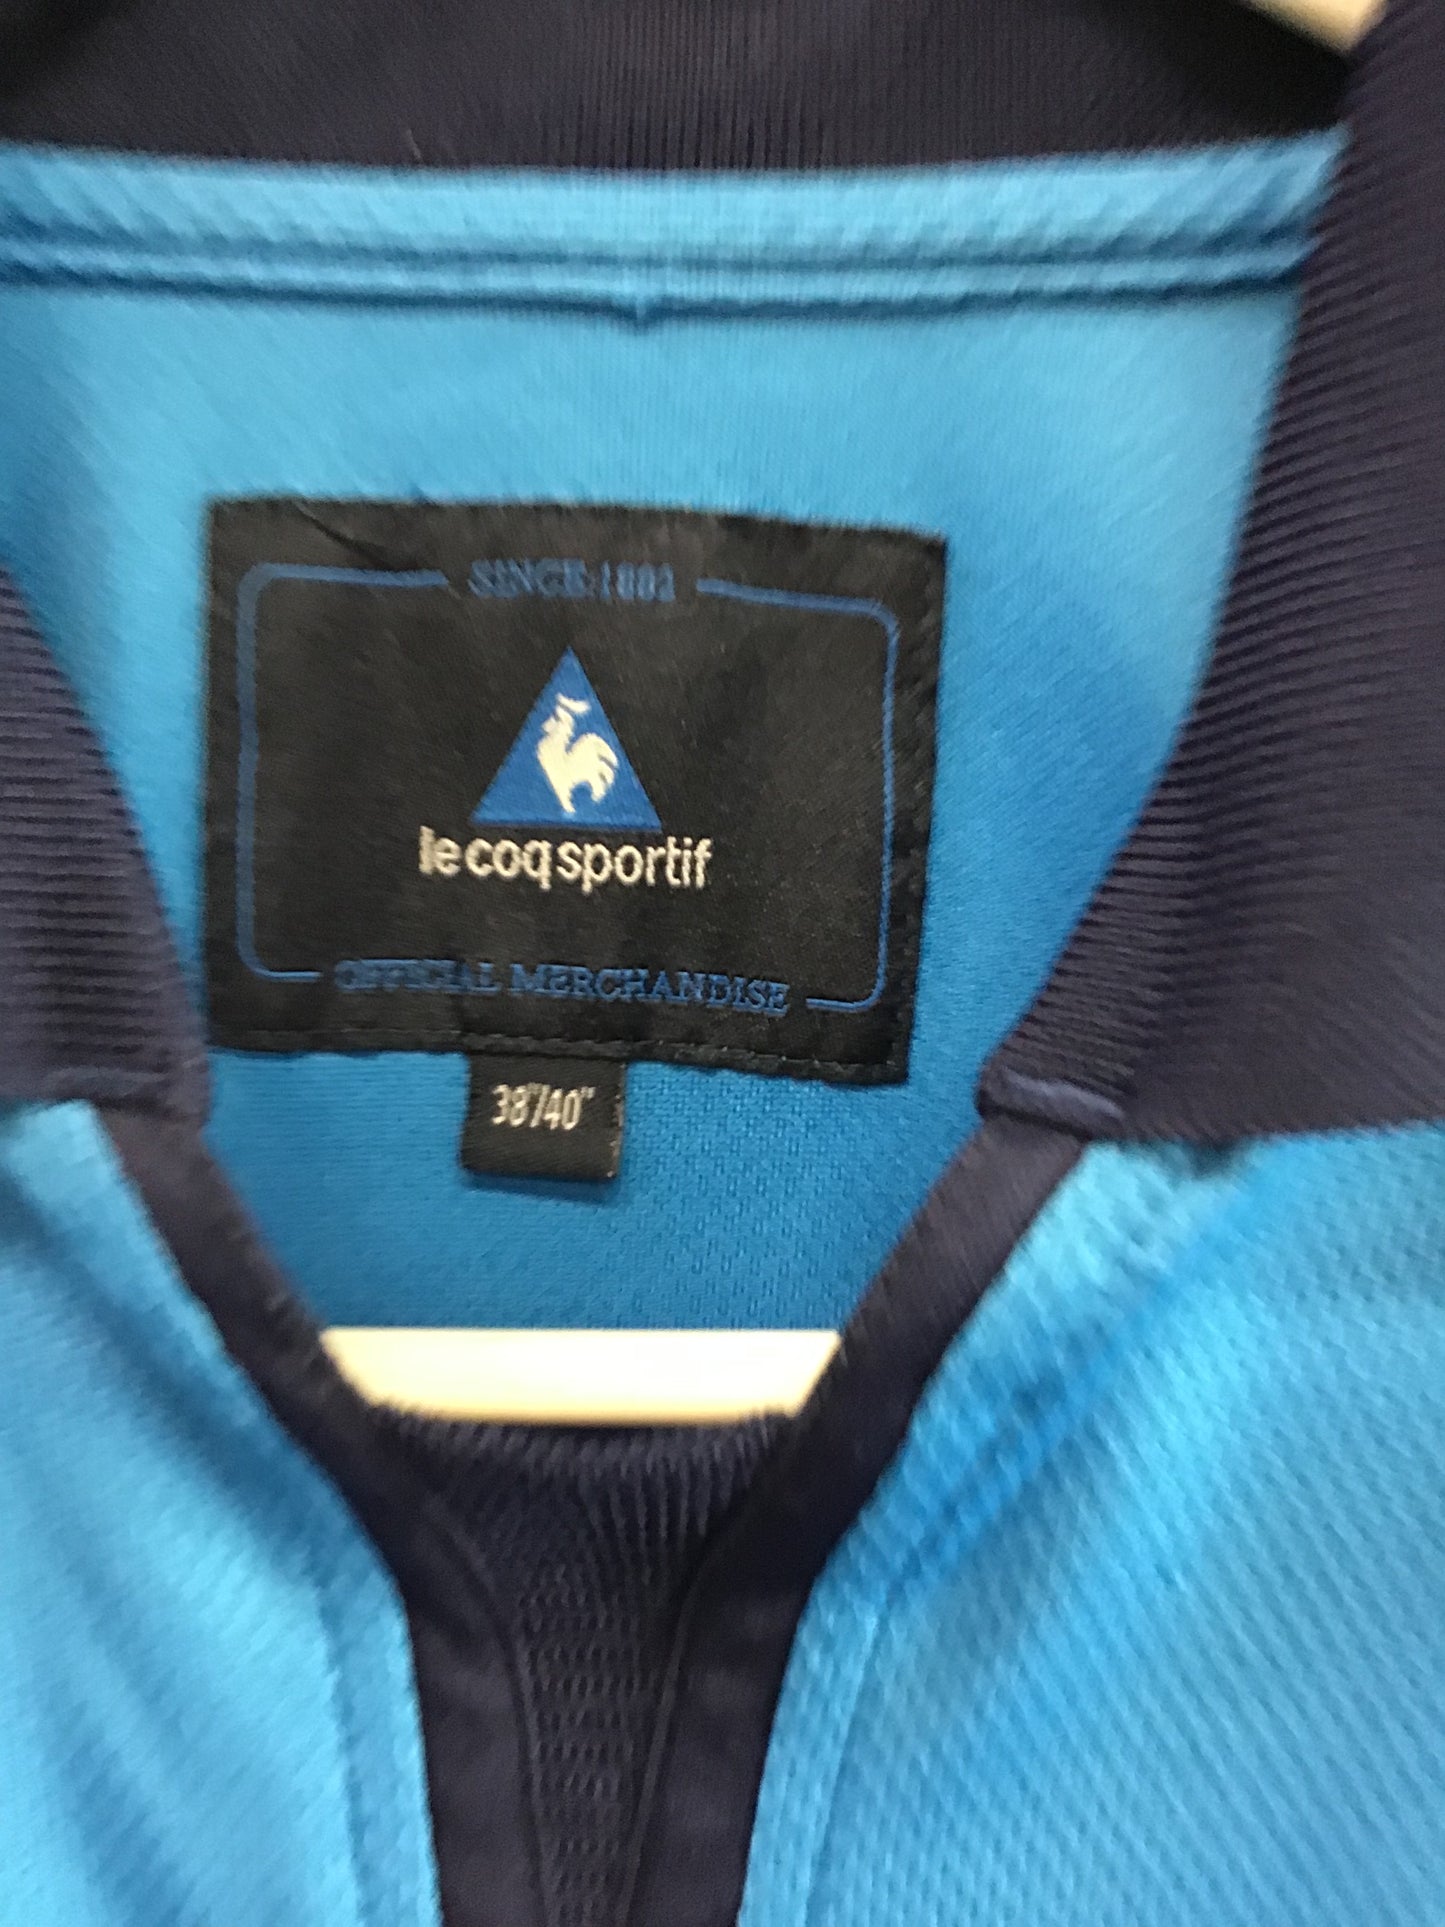 Le Coq Sportif MCFC Golf Shirt, Size 38”/40”